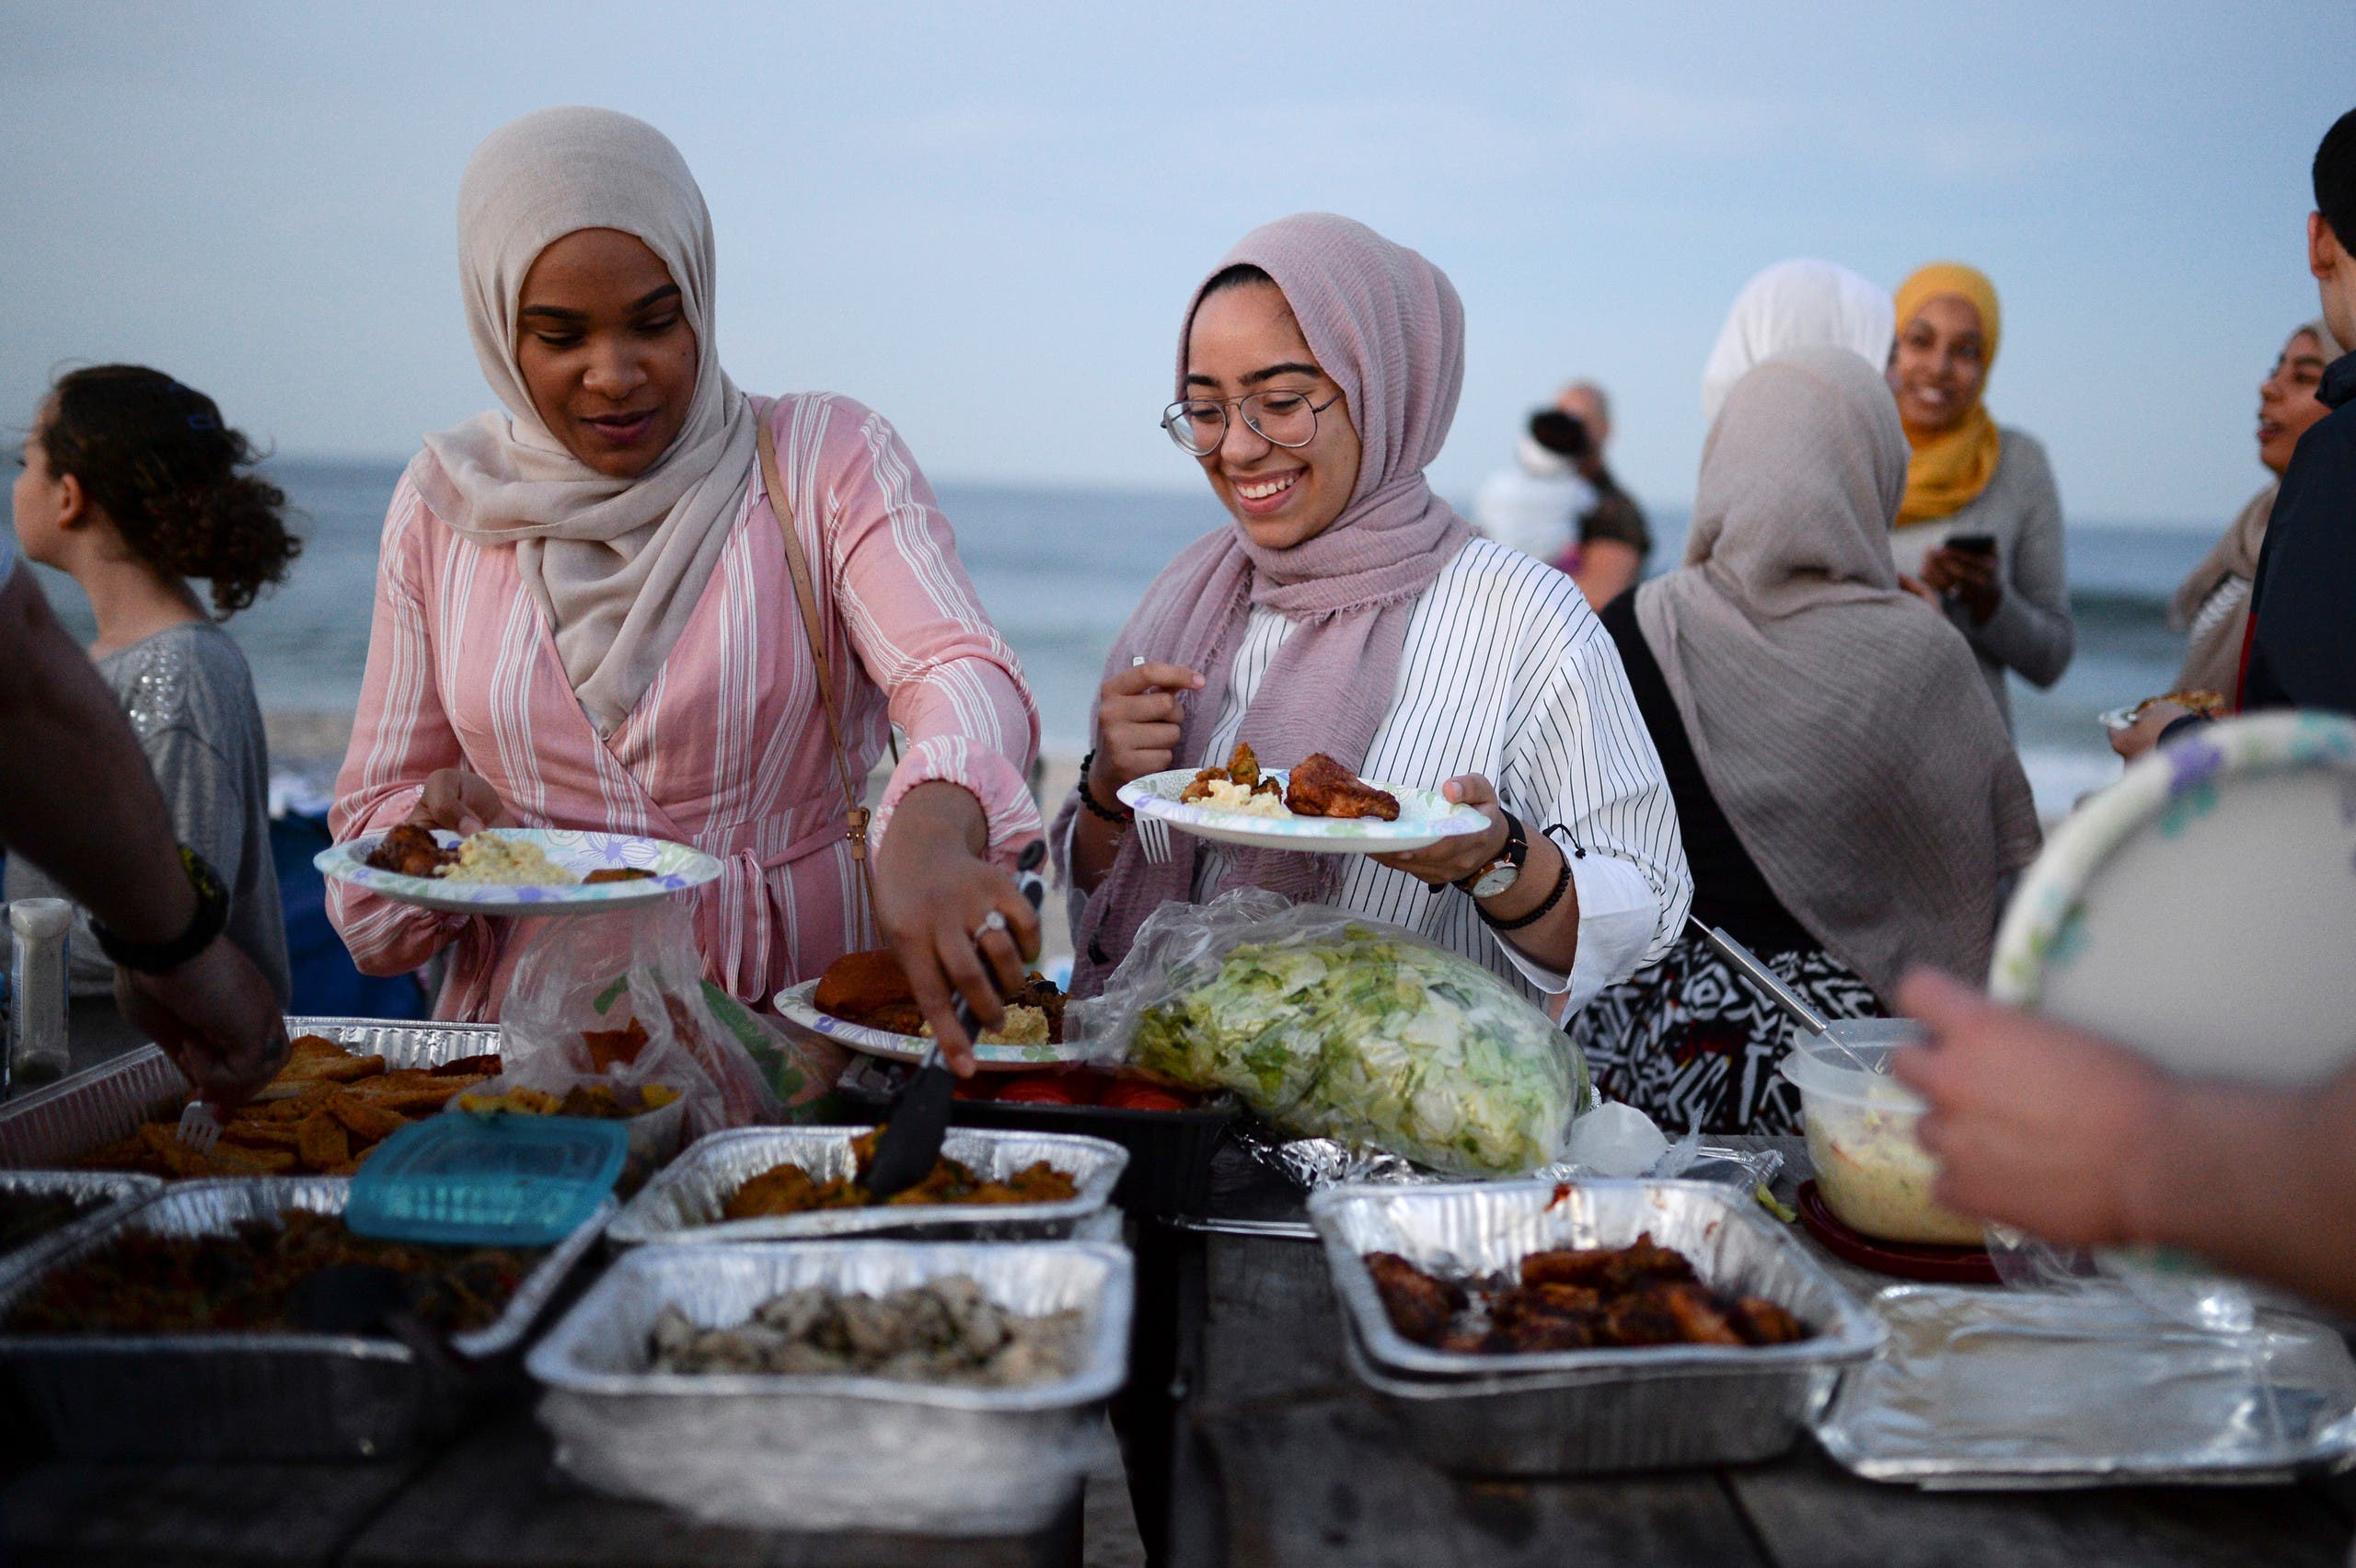 Muslims around the world celebrate Eid alFitr holiday as Ramadan ends